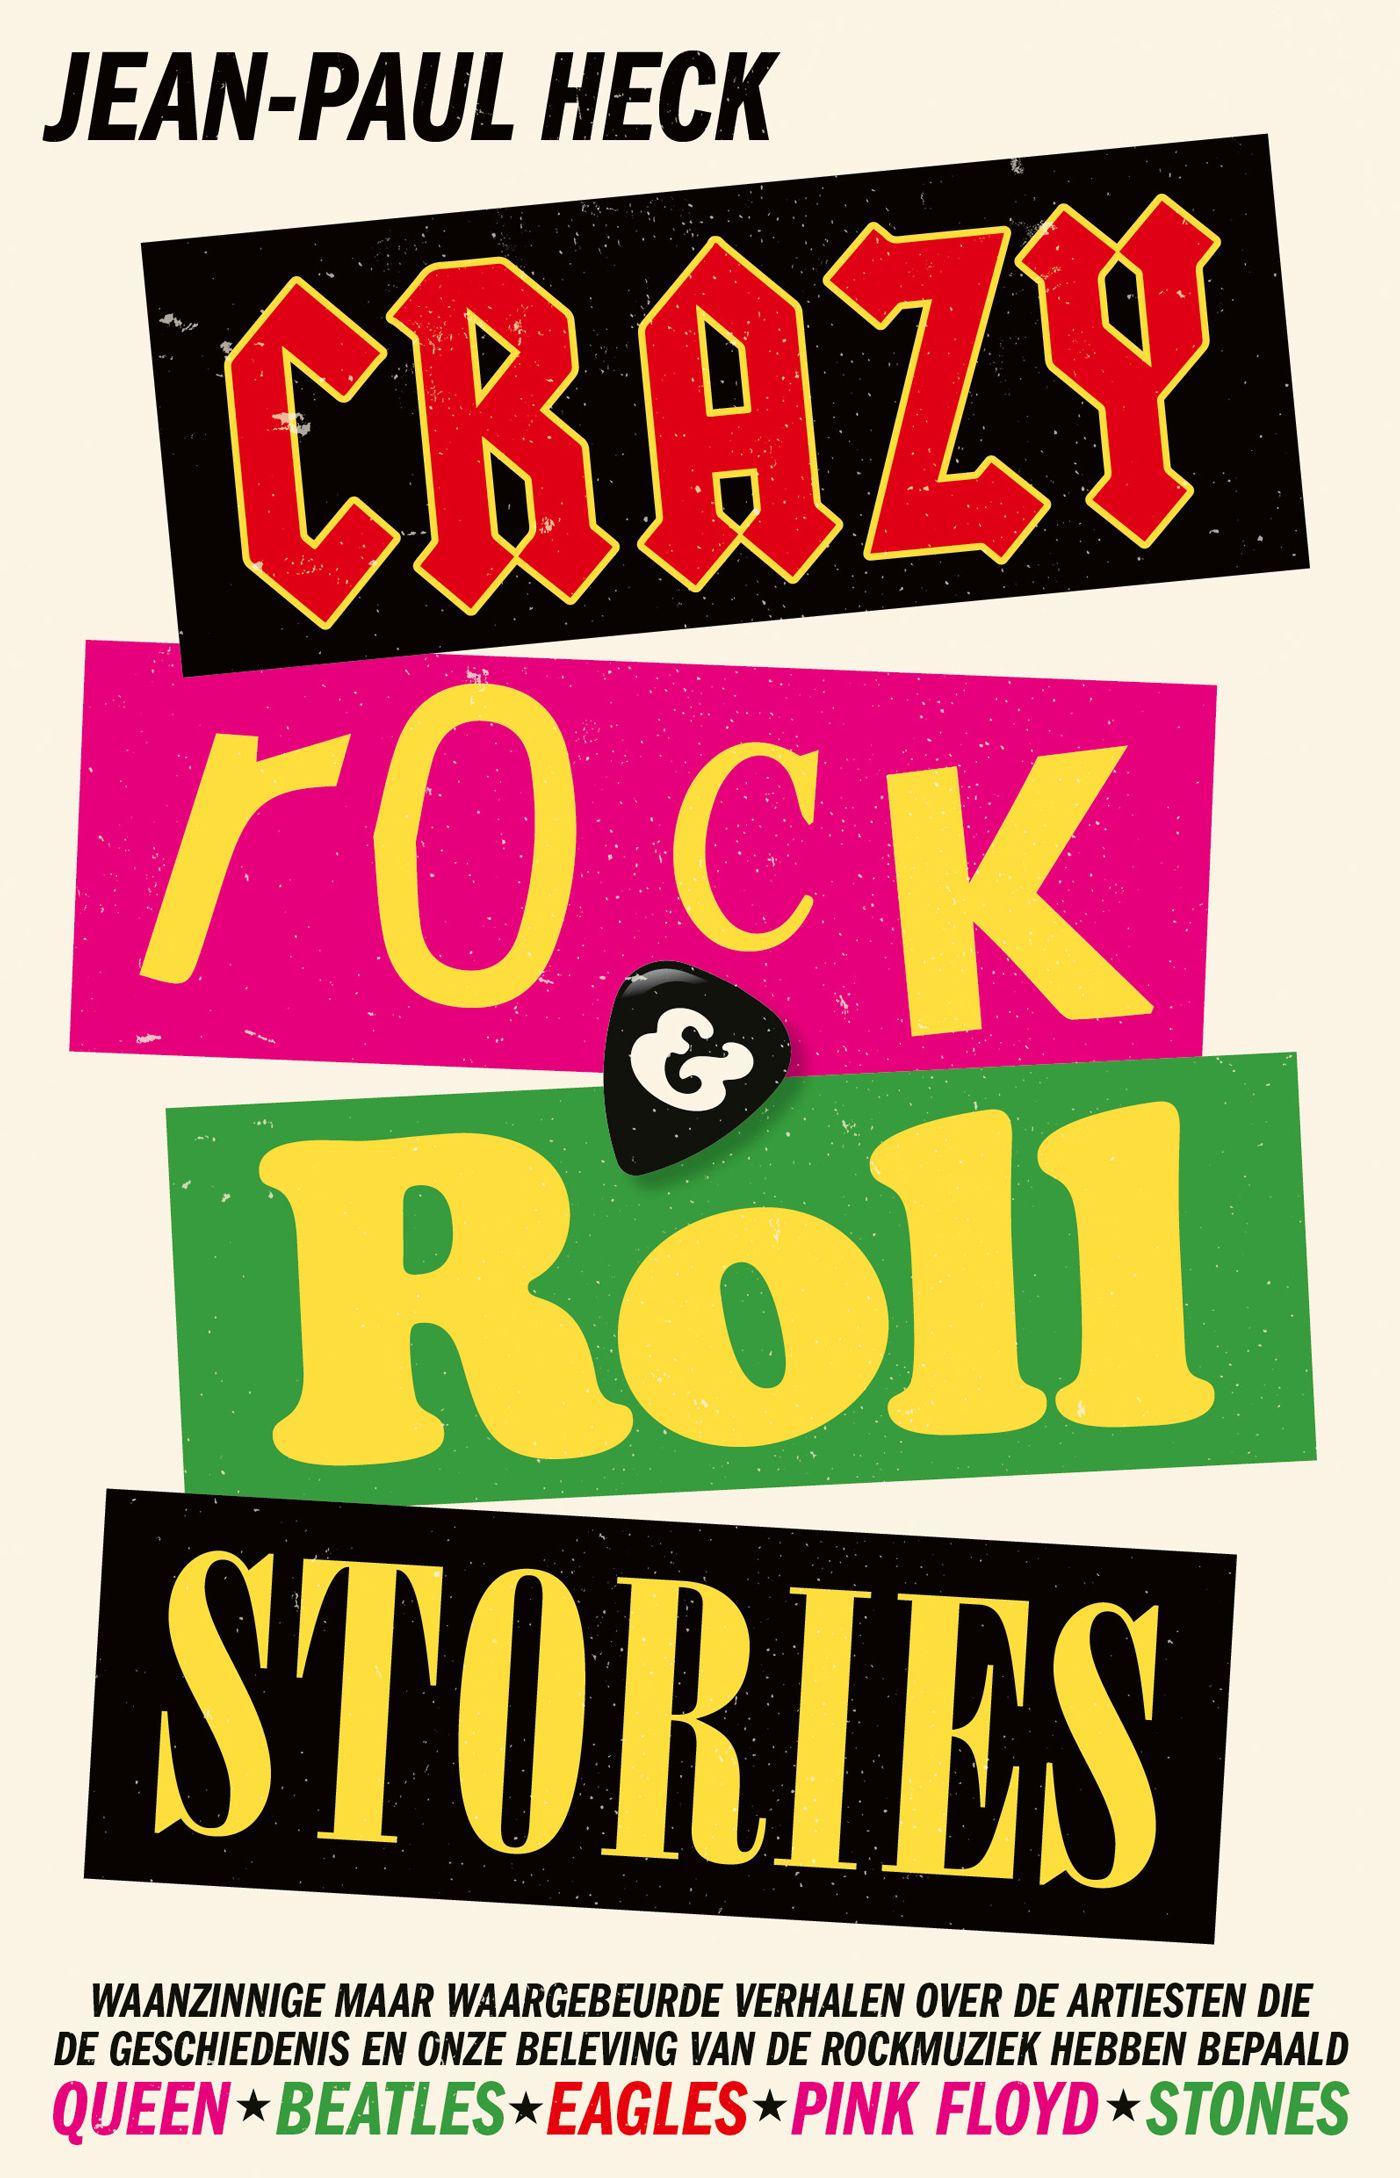 Heck, Jean-Paul - Crazy rock & roll stories